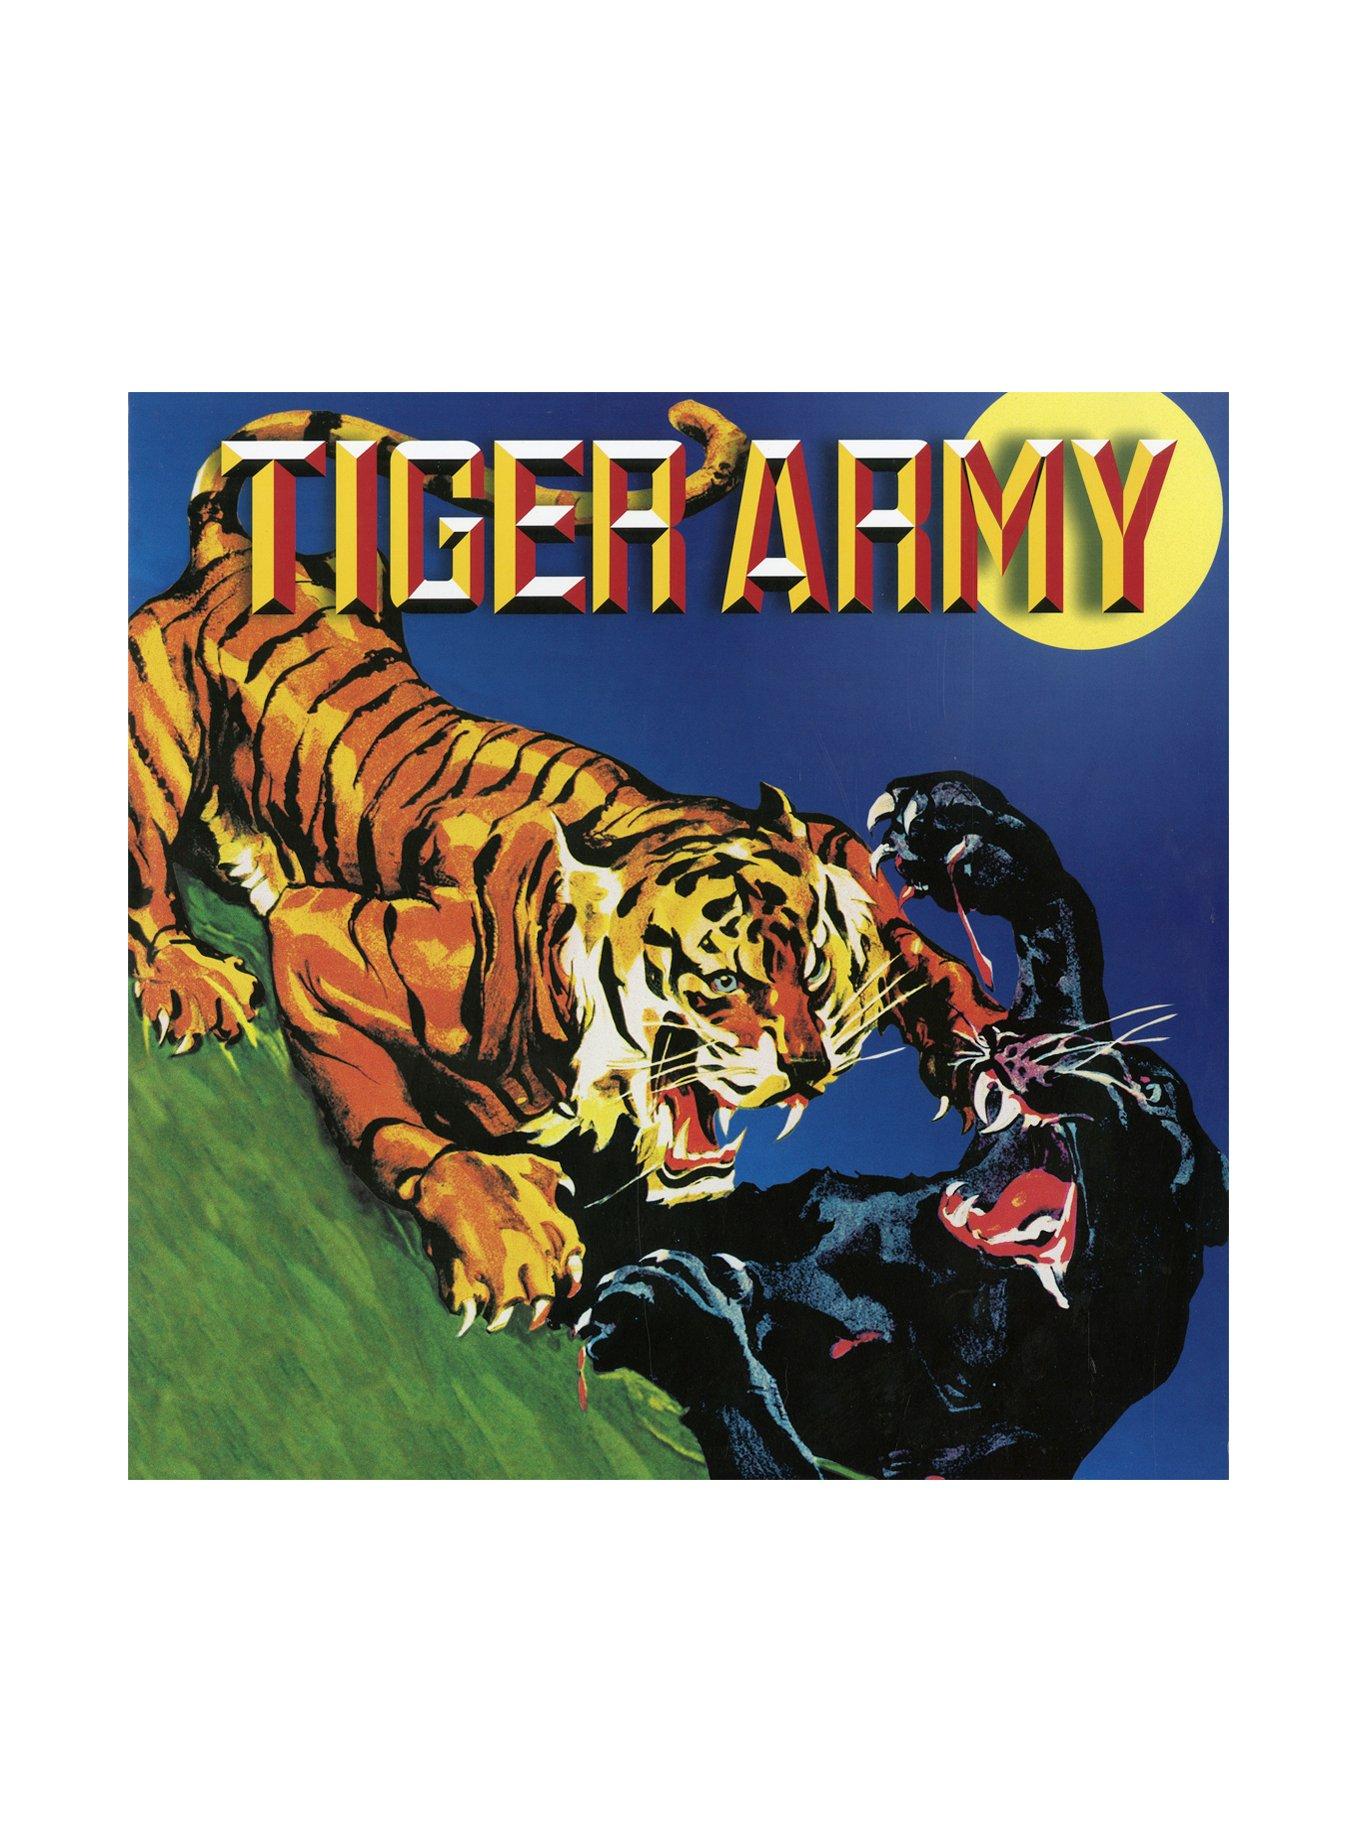 Tiger Army - Self-Titled Vinyl LP Hot Topic Exclusive, , hi-res